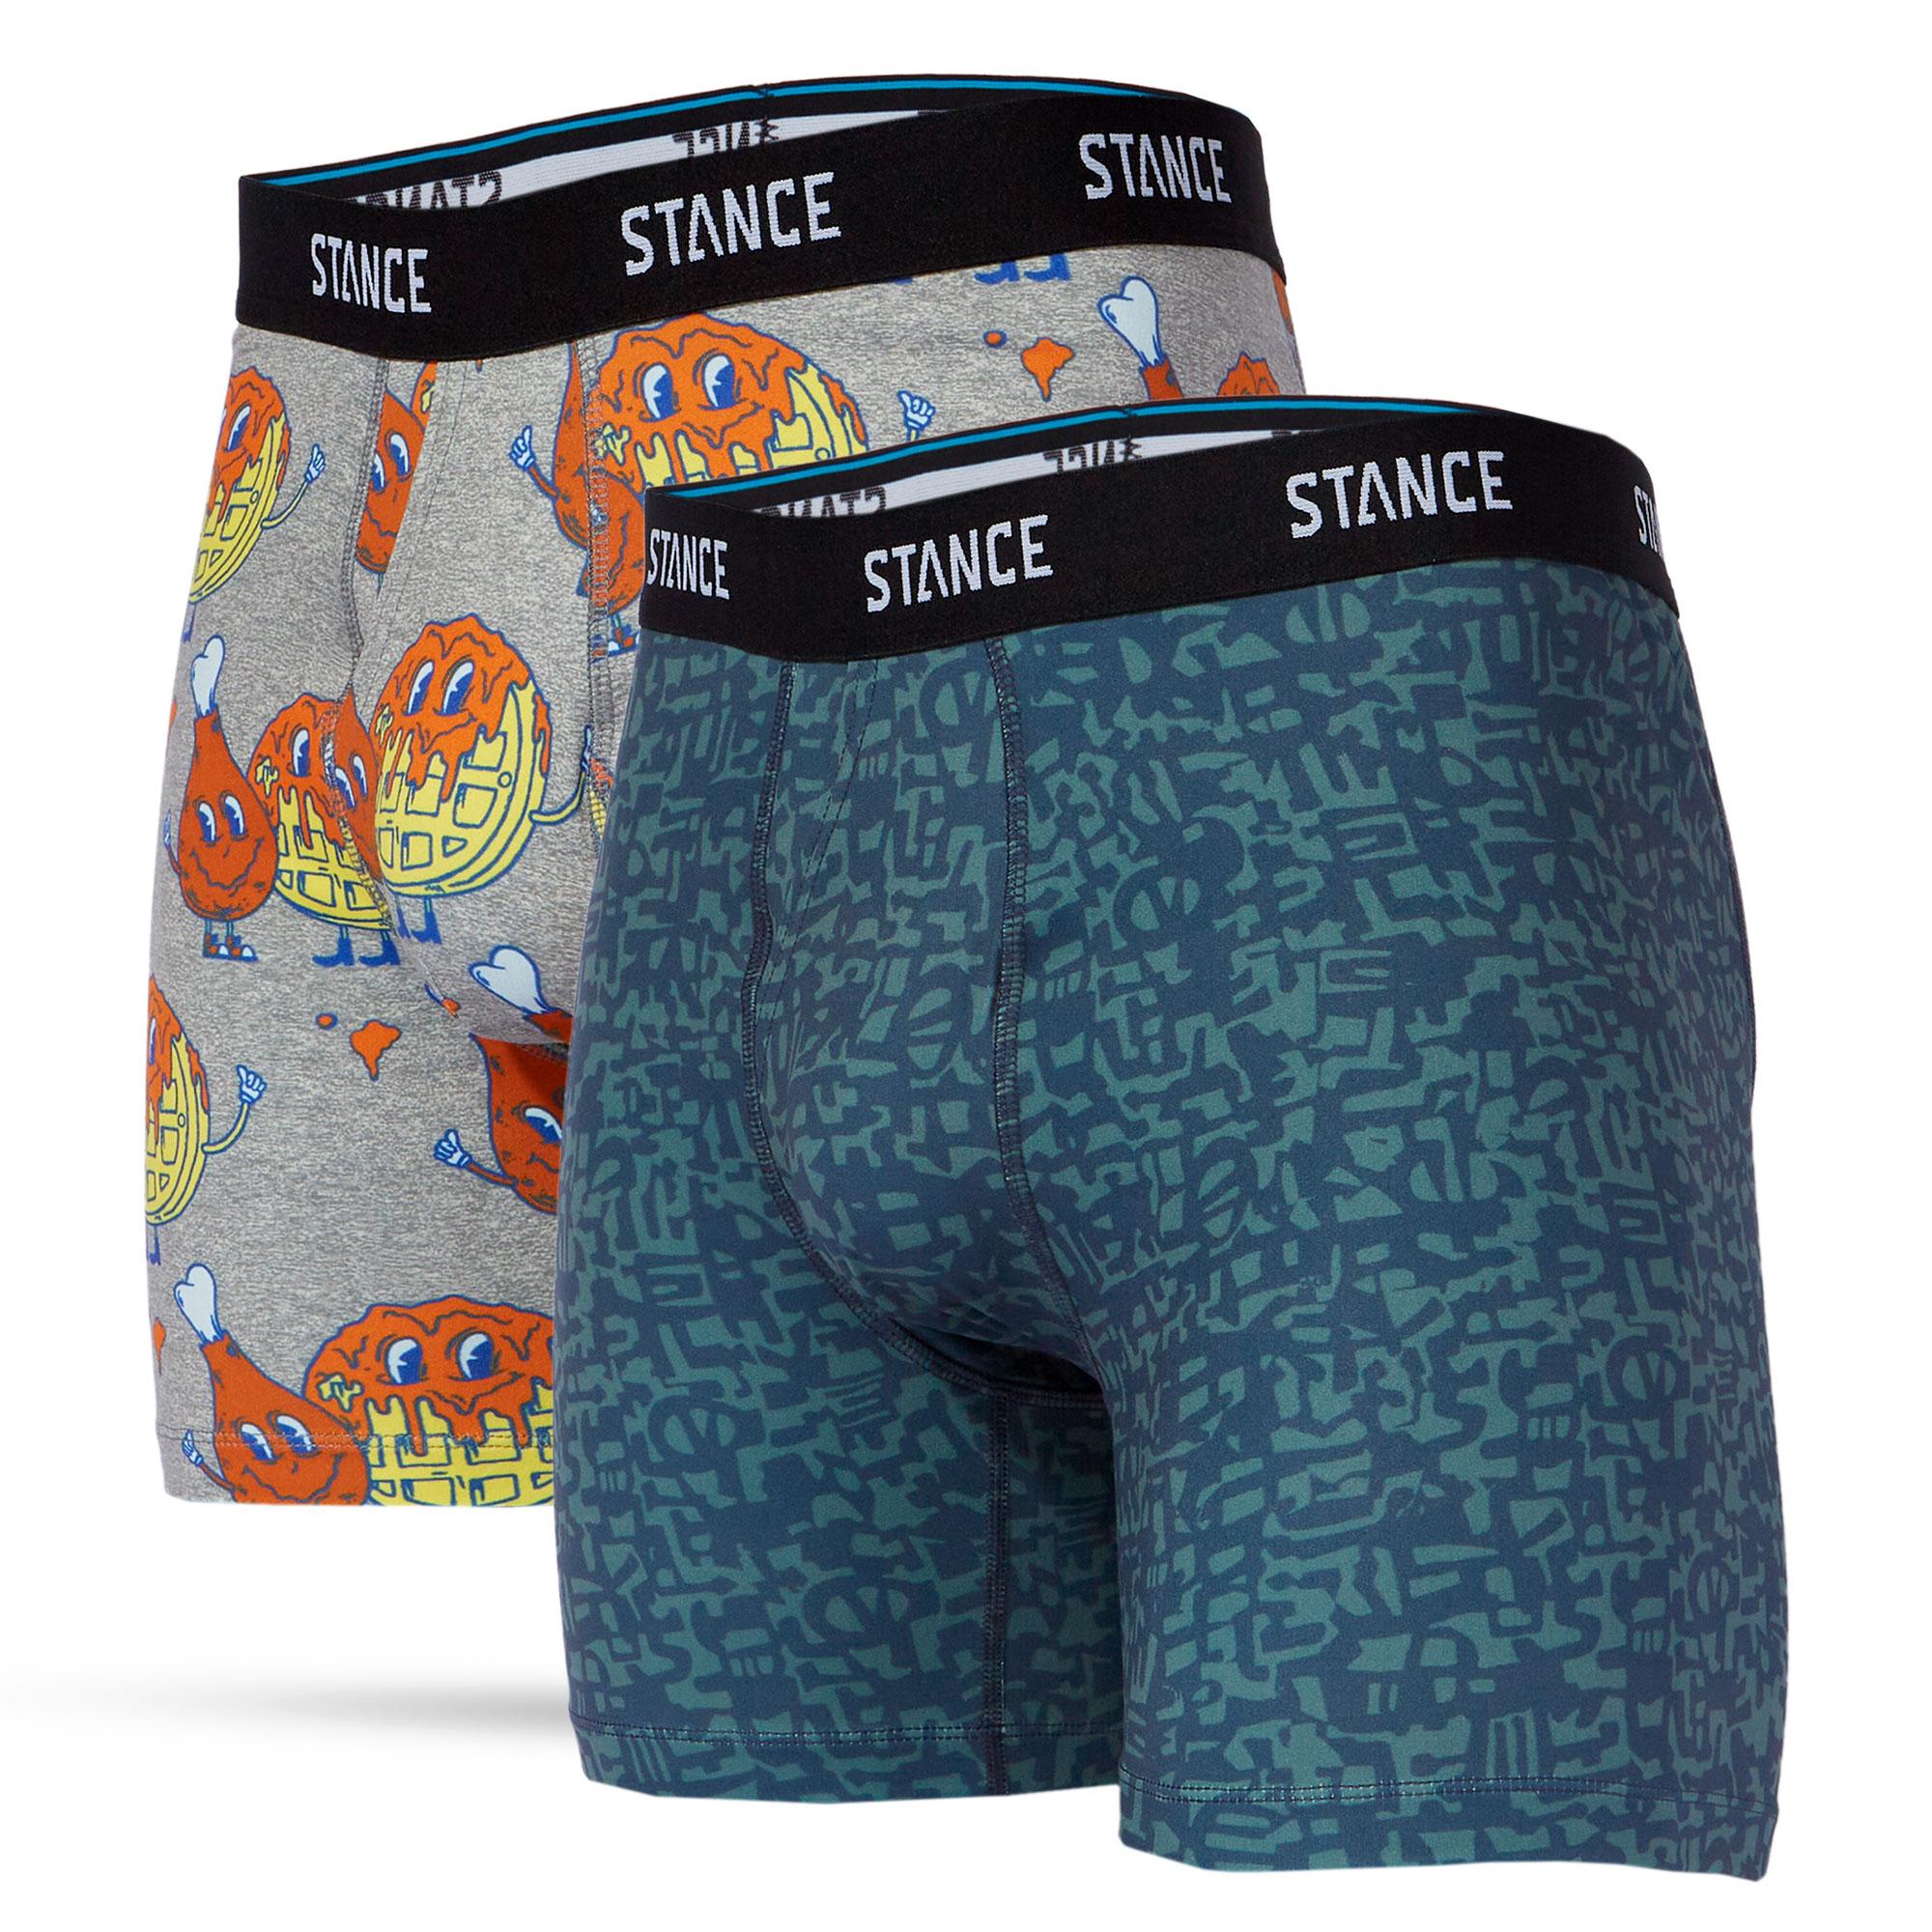 Stance, Underwear & Socks, New Stance 6 Boxer Briefs Large Set Of 2